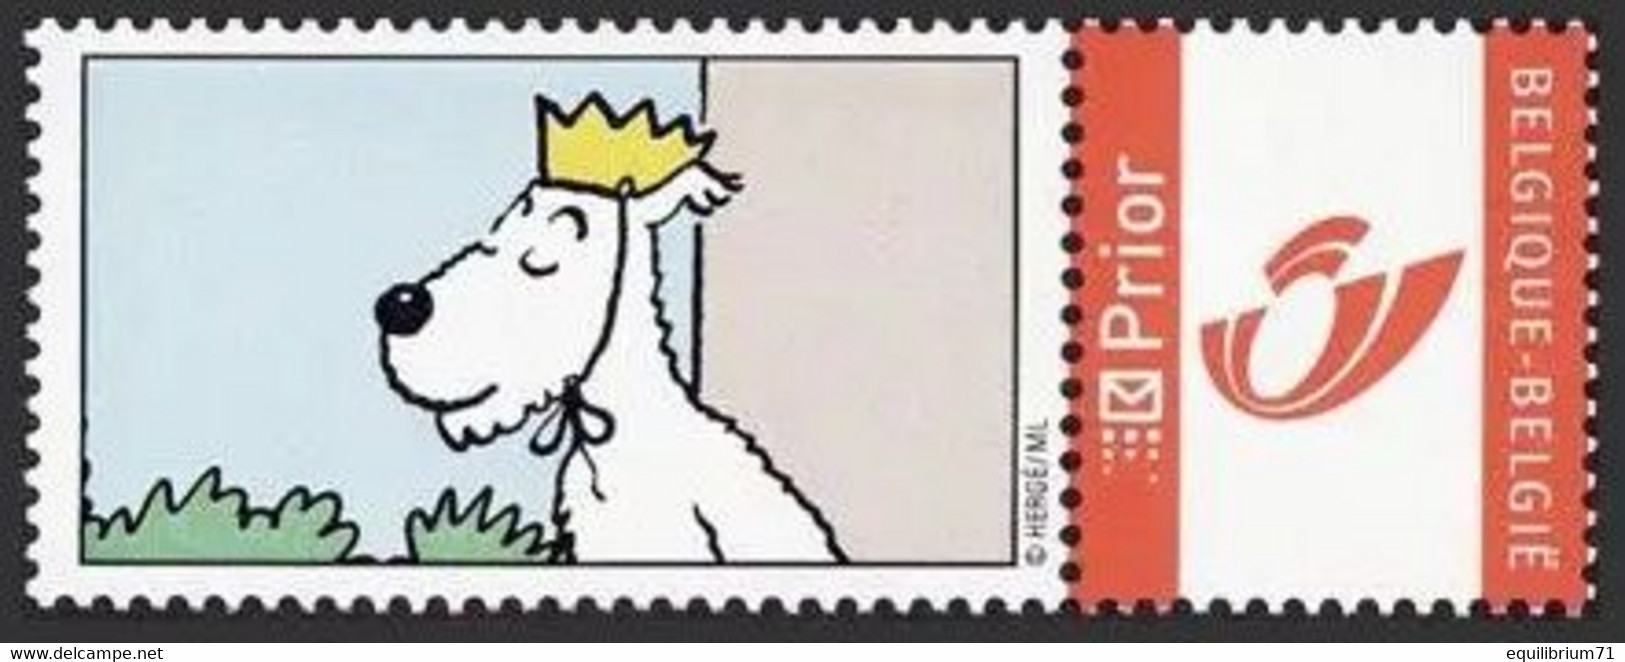 DUOSTAMP/MYSTAMP** - Milou, Roi / Bobbie, Koning / Struppi, König / Snowy, King - (Hergé) - Philabédés